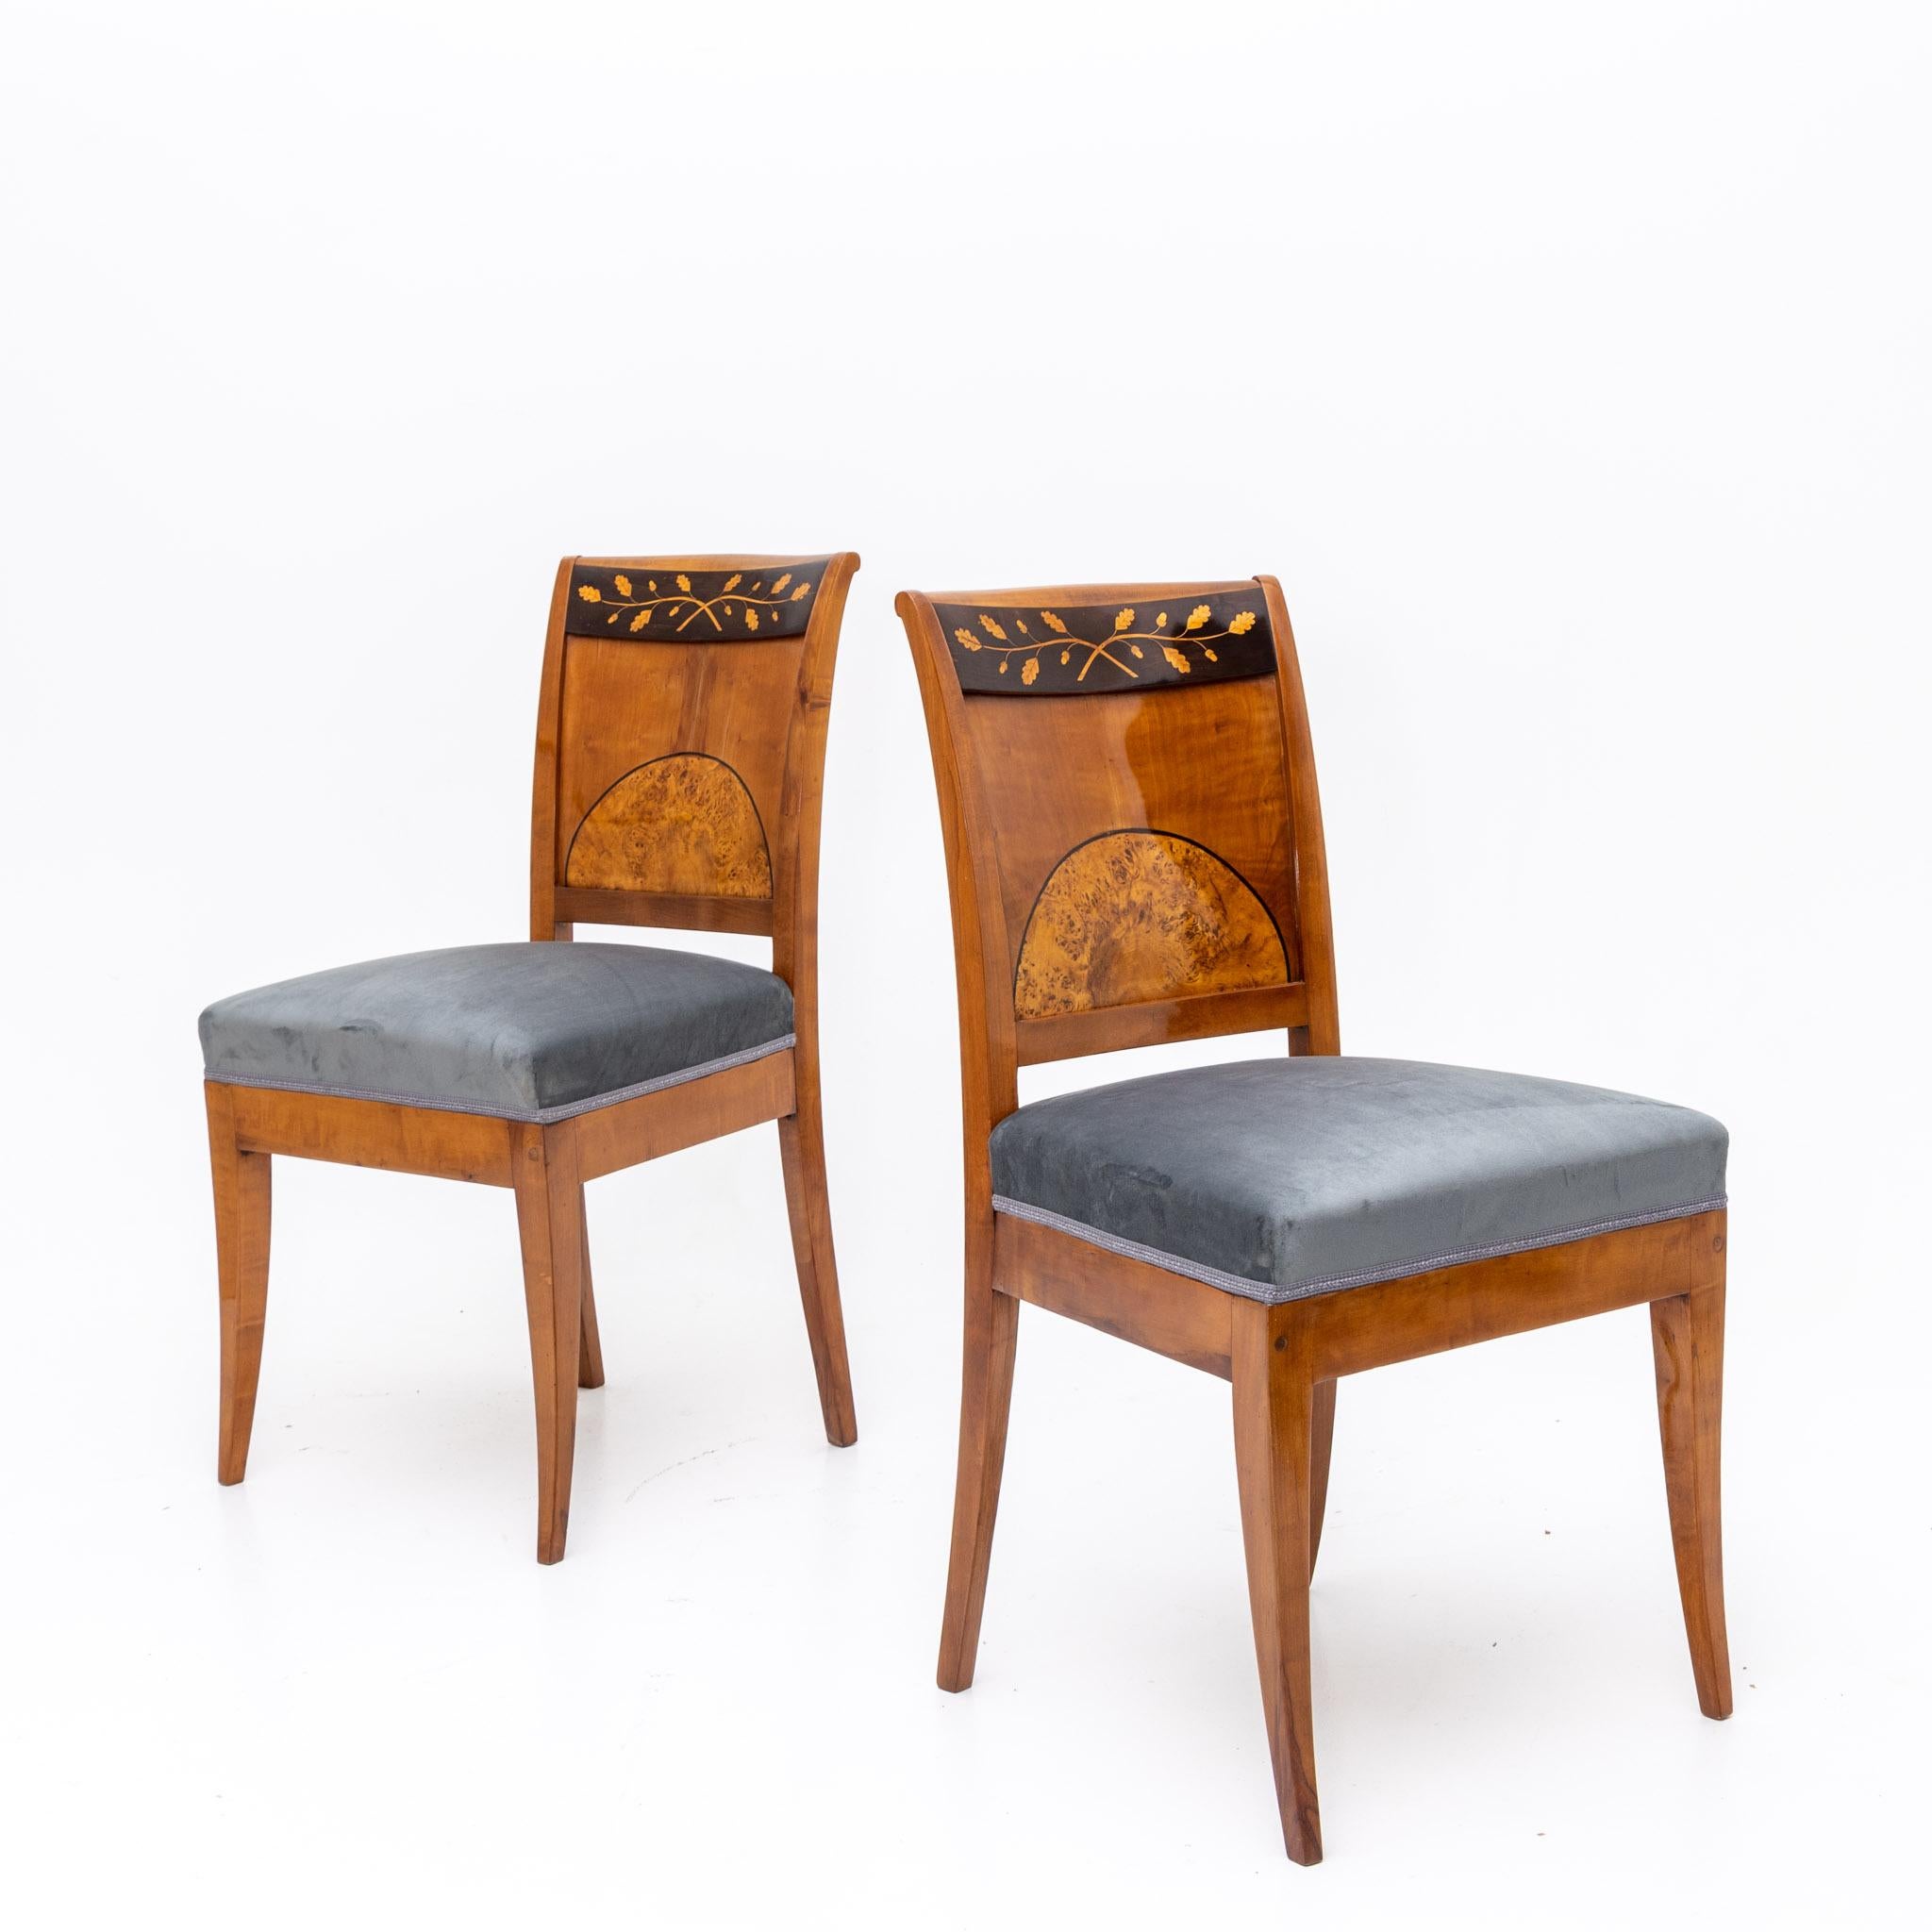 Early 19th Century Biedermeier Chairs, Central German circa 1820